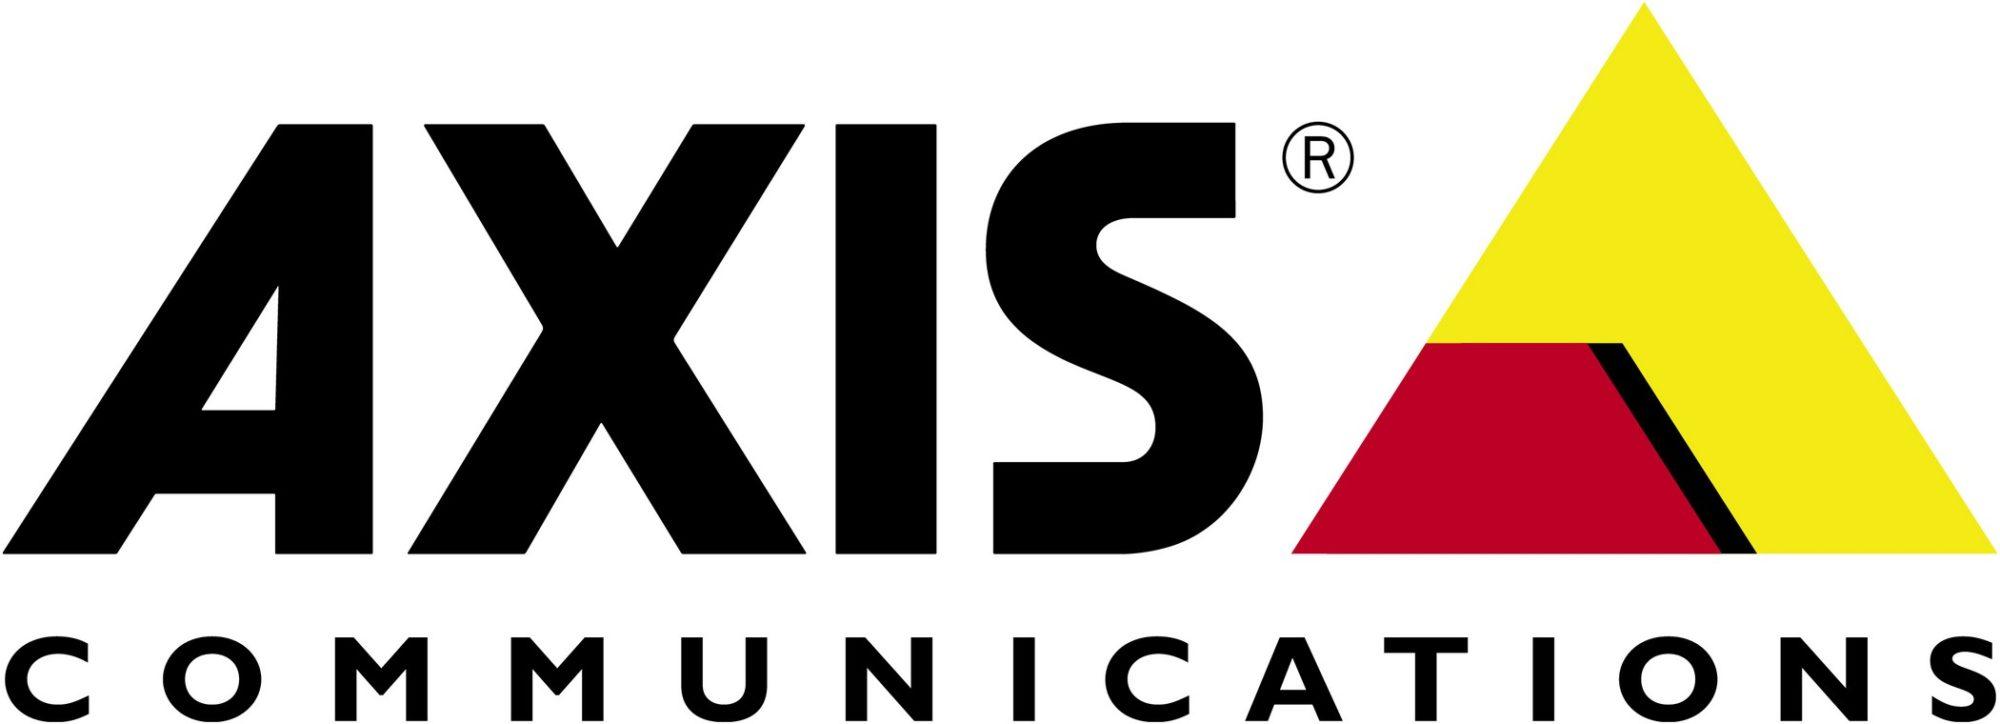 Axis Communications Logo - Axis Communications Logo Low Voltage